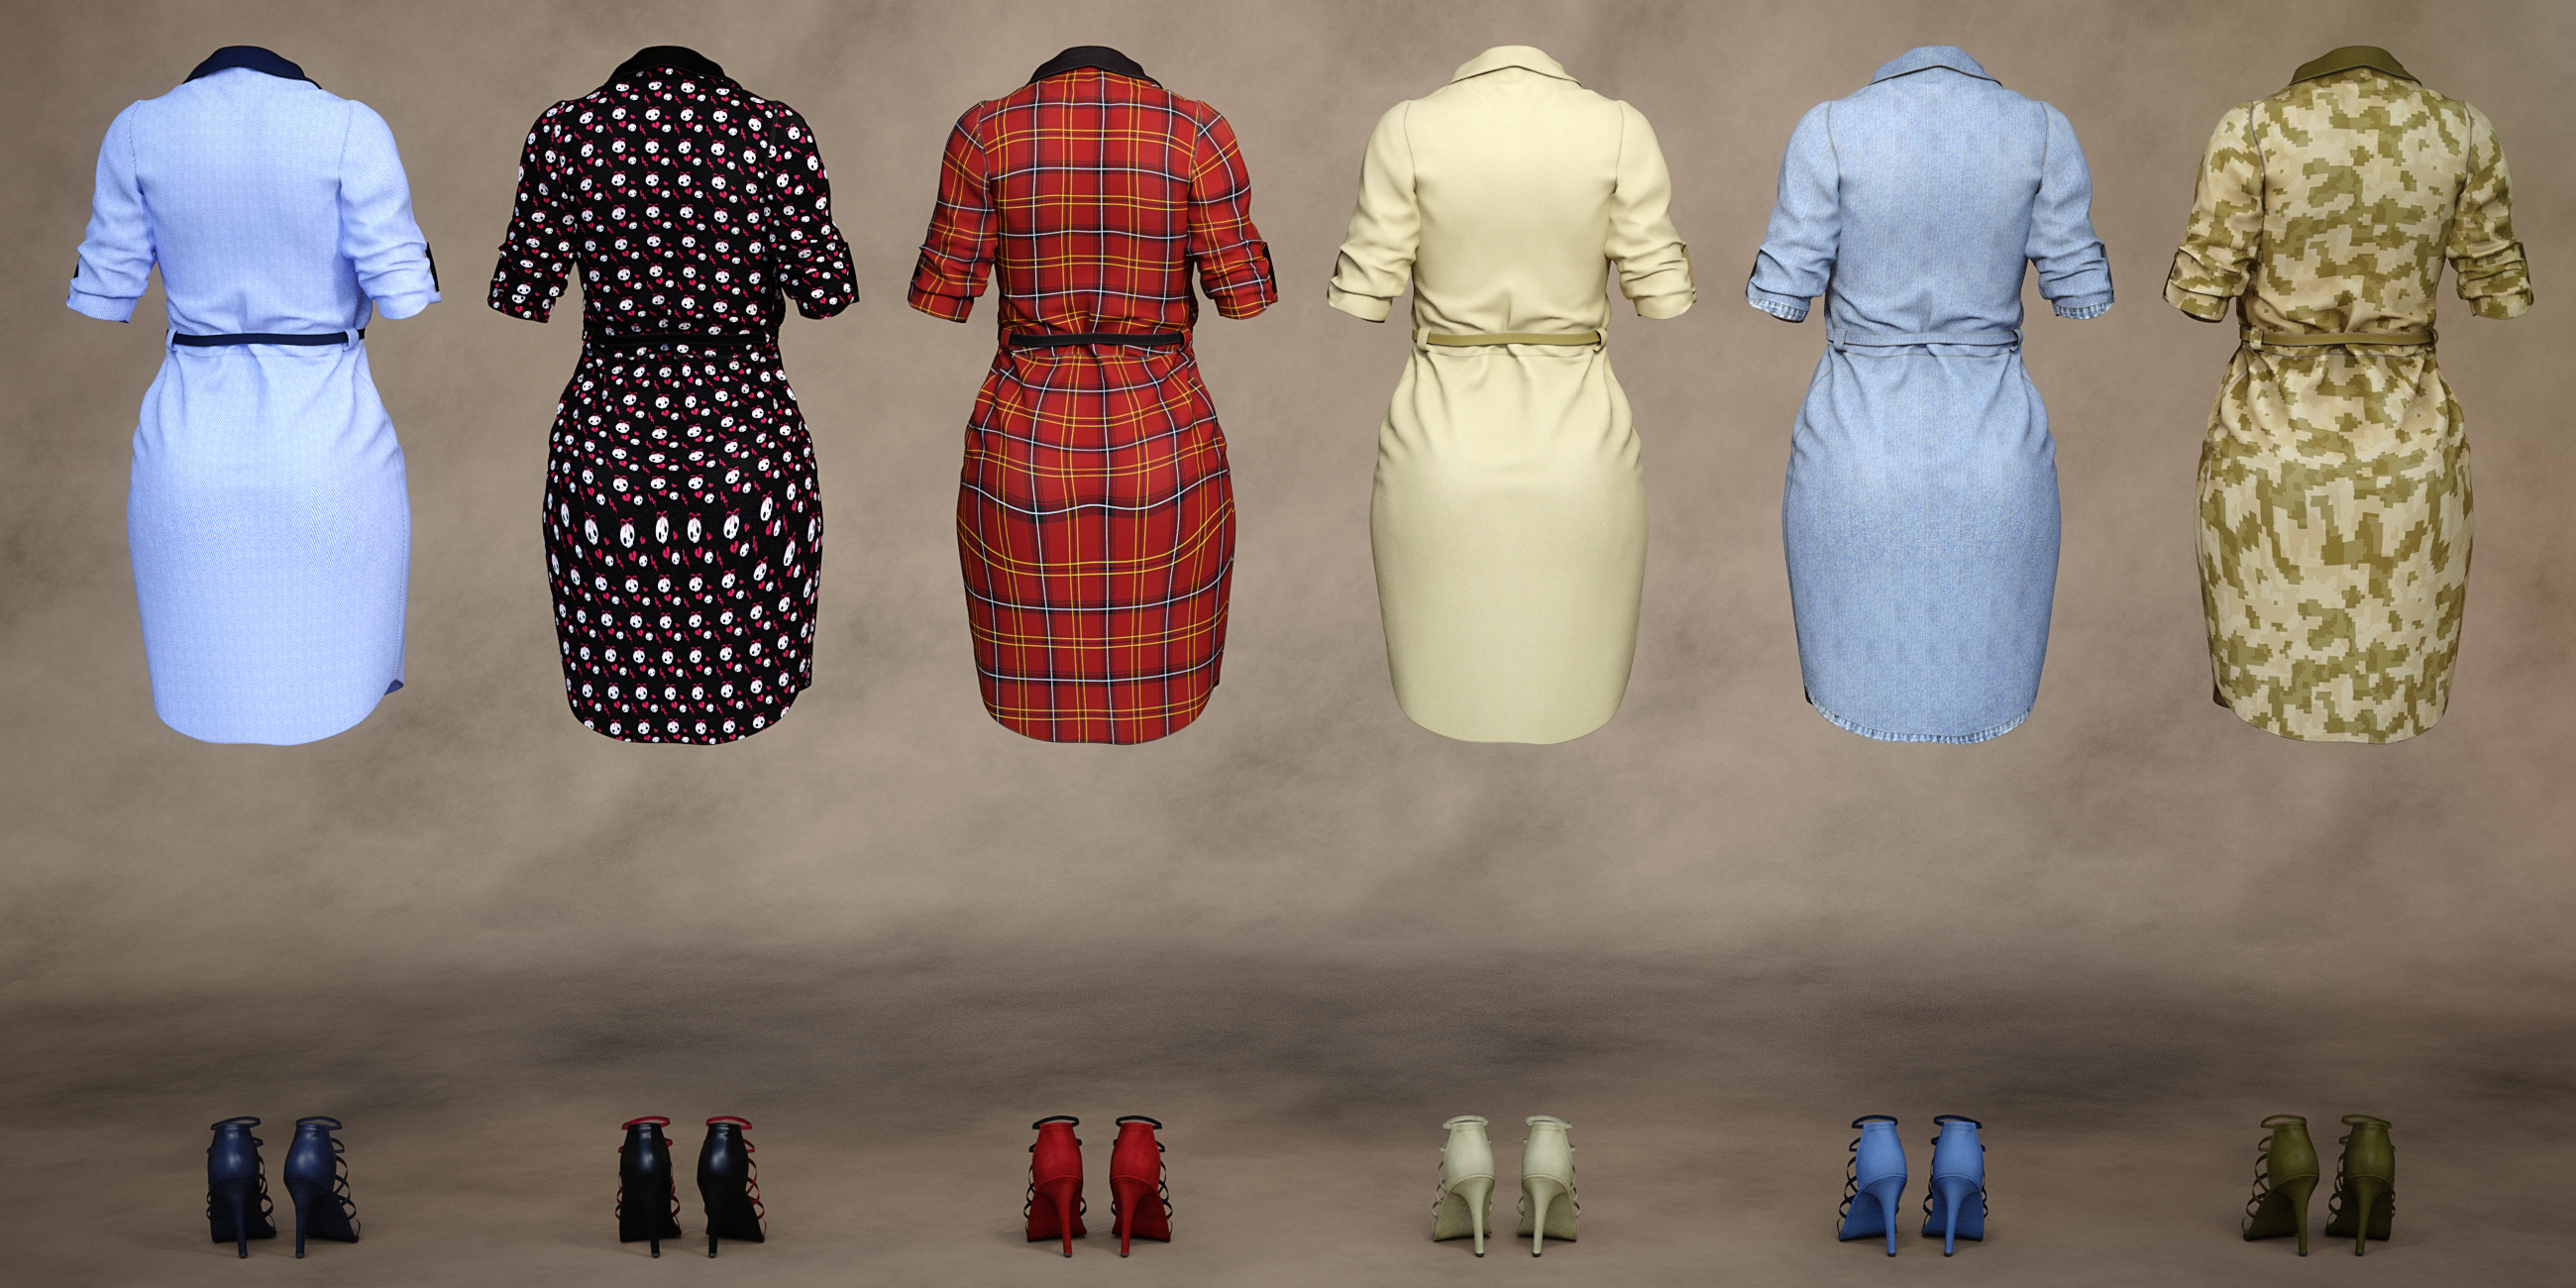 Shirt Dress Outfit Textures by: Arien, 3D Models by Daz 3D